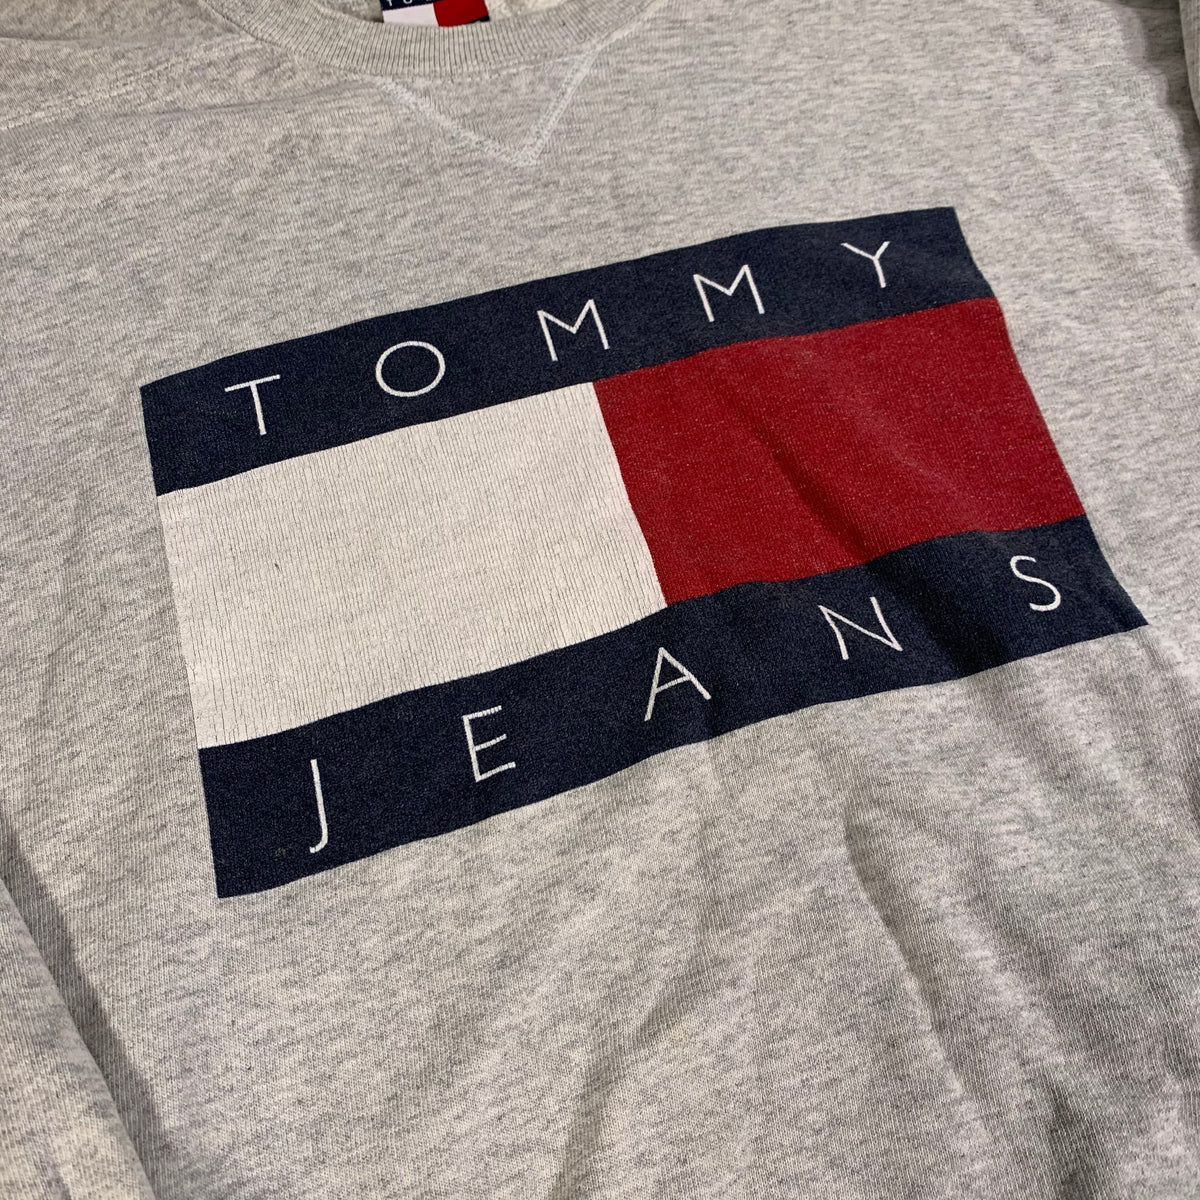 Vintage Tommy Hilfiger Jeans Crewneck Sweatshirt